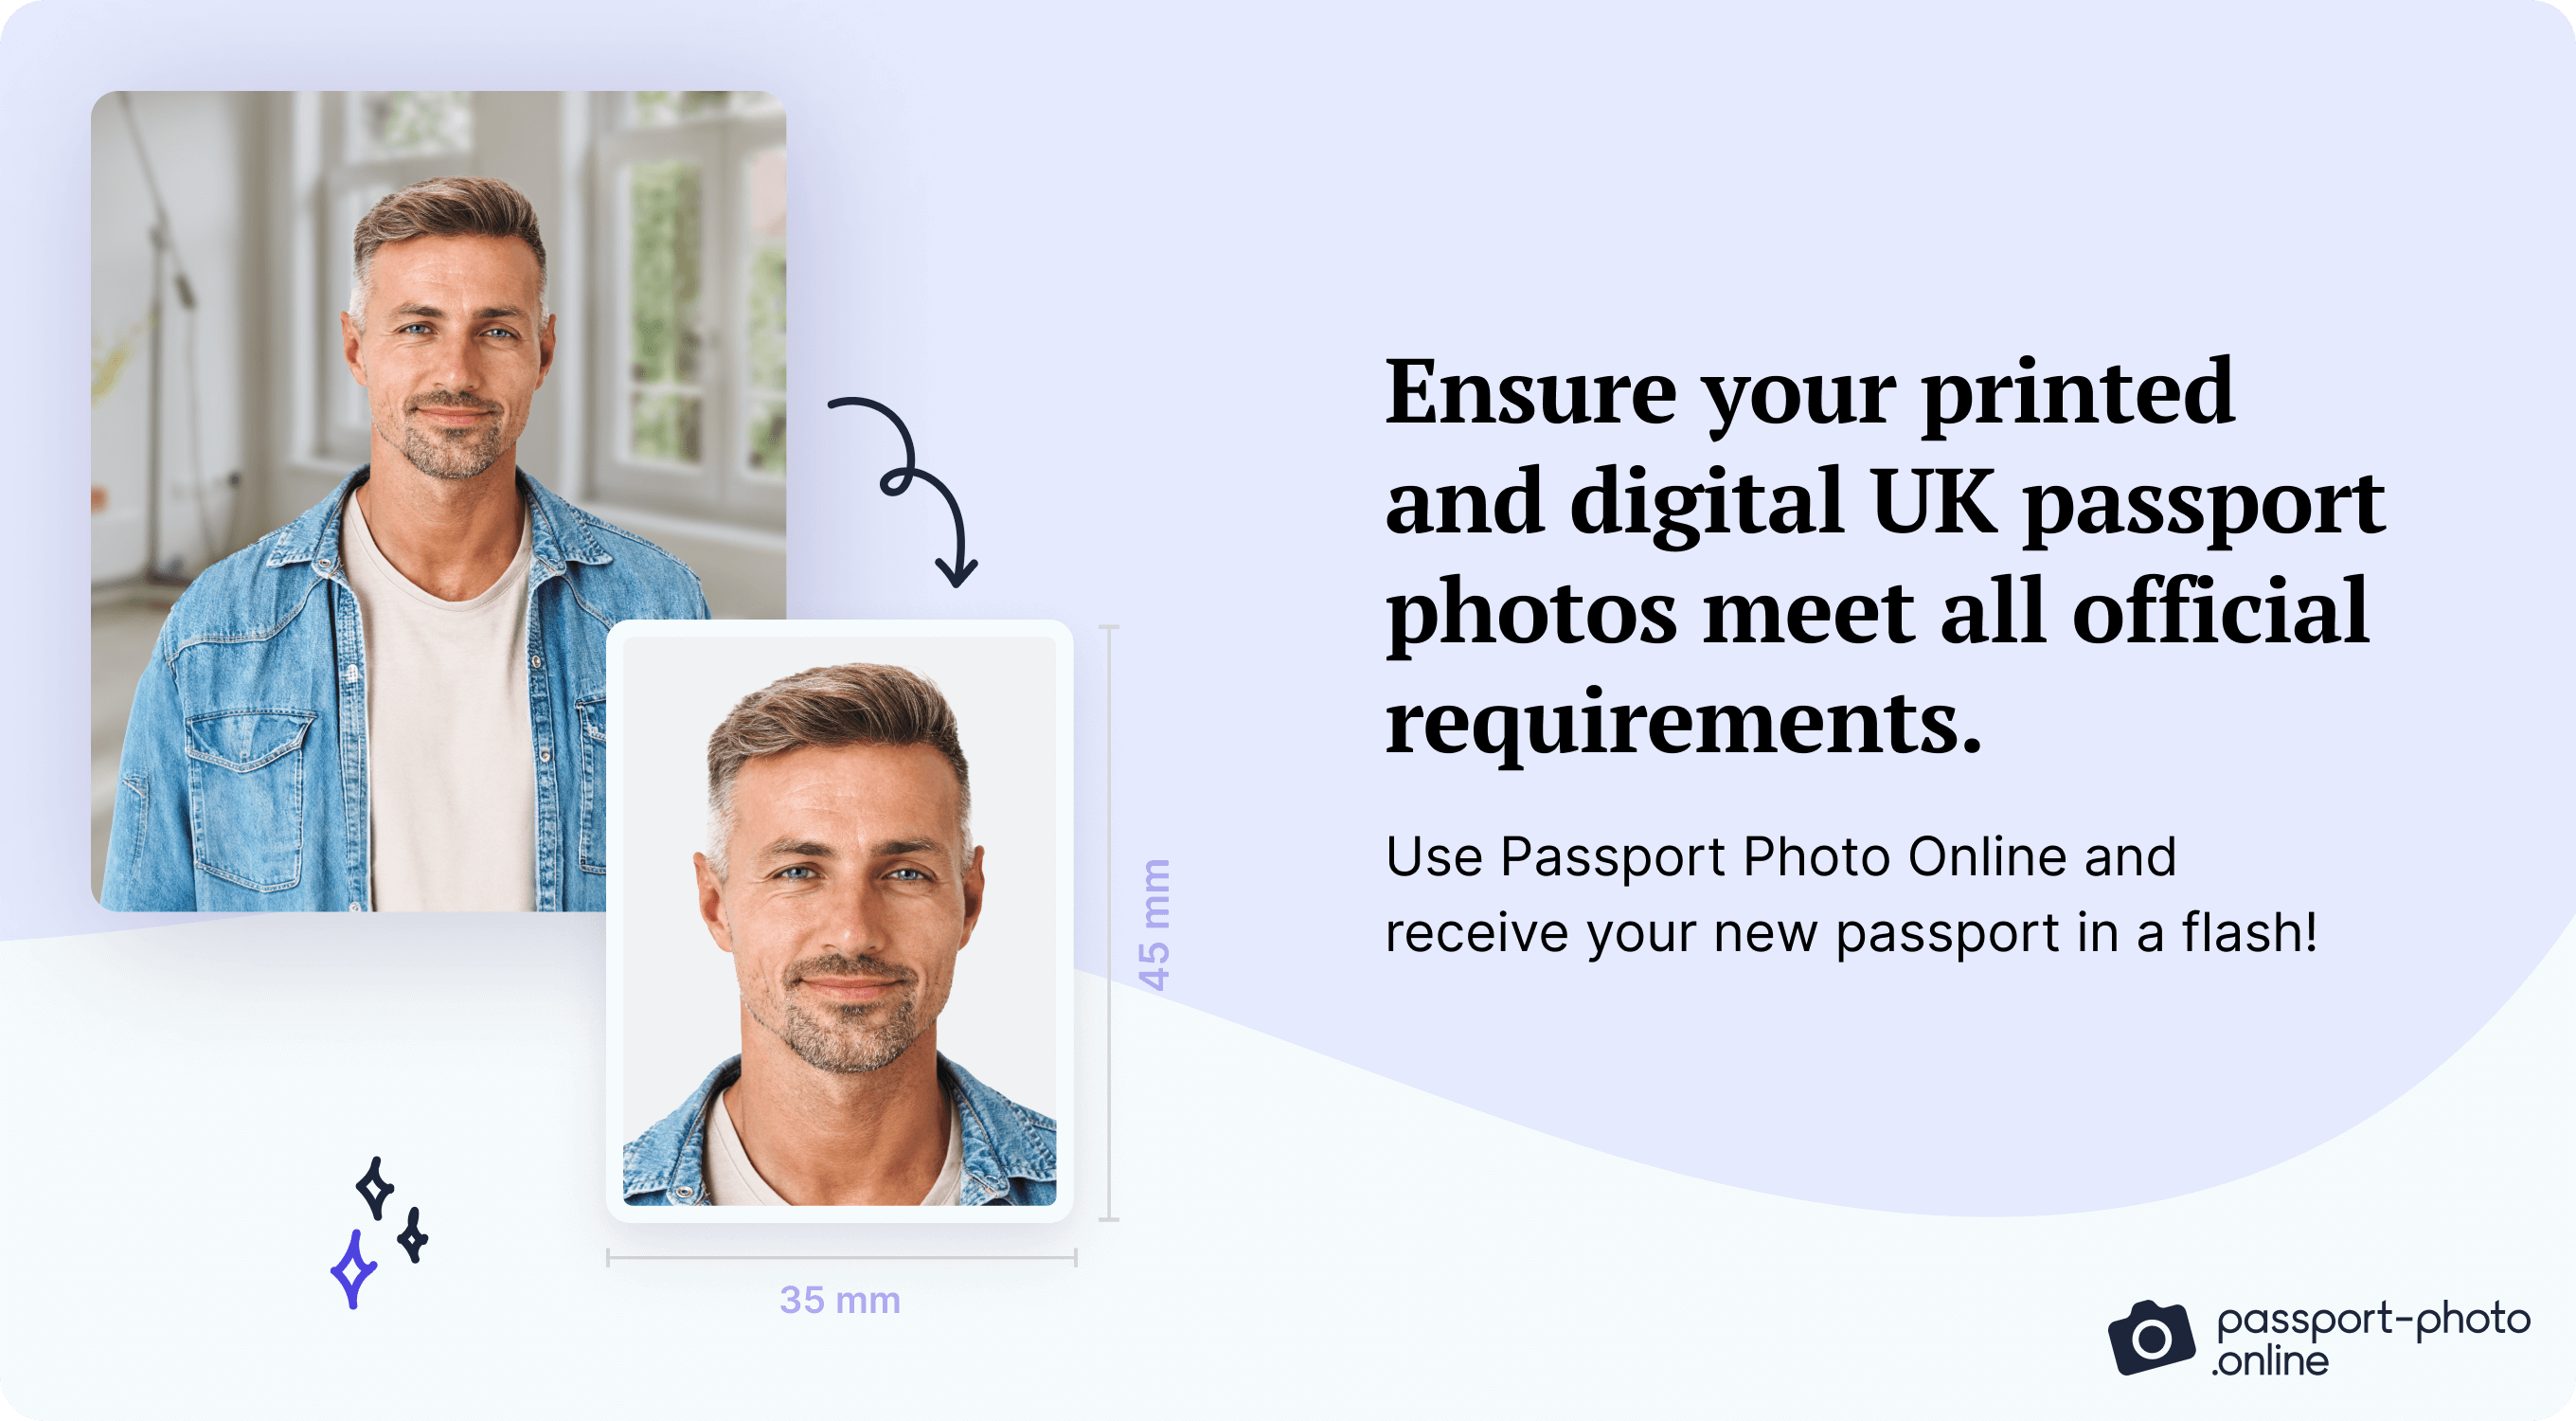 Passport Photo Online for perfect, 100% compliant UK passport photos.